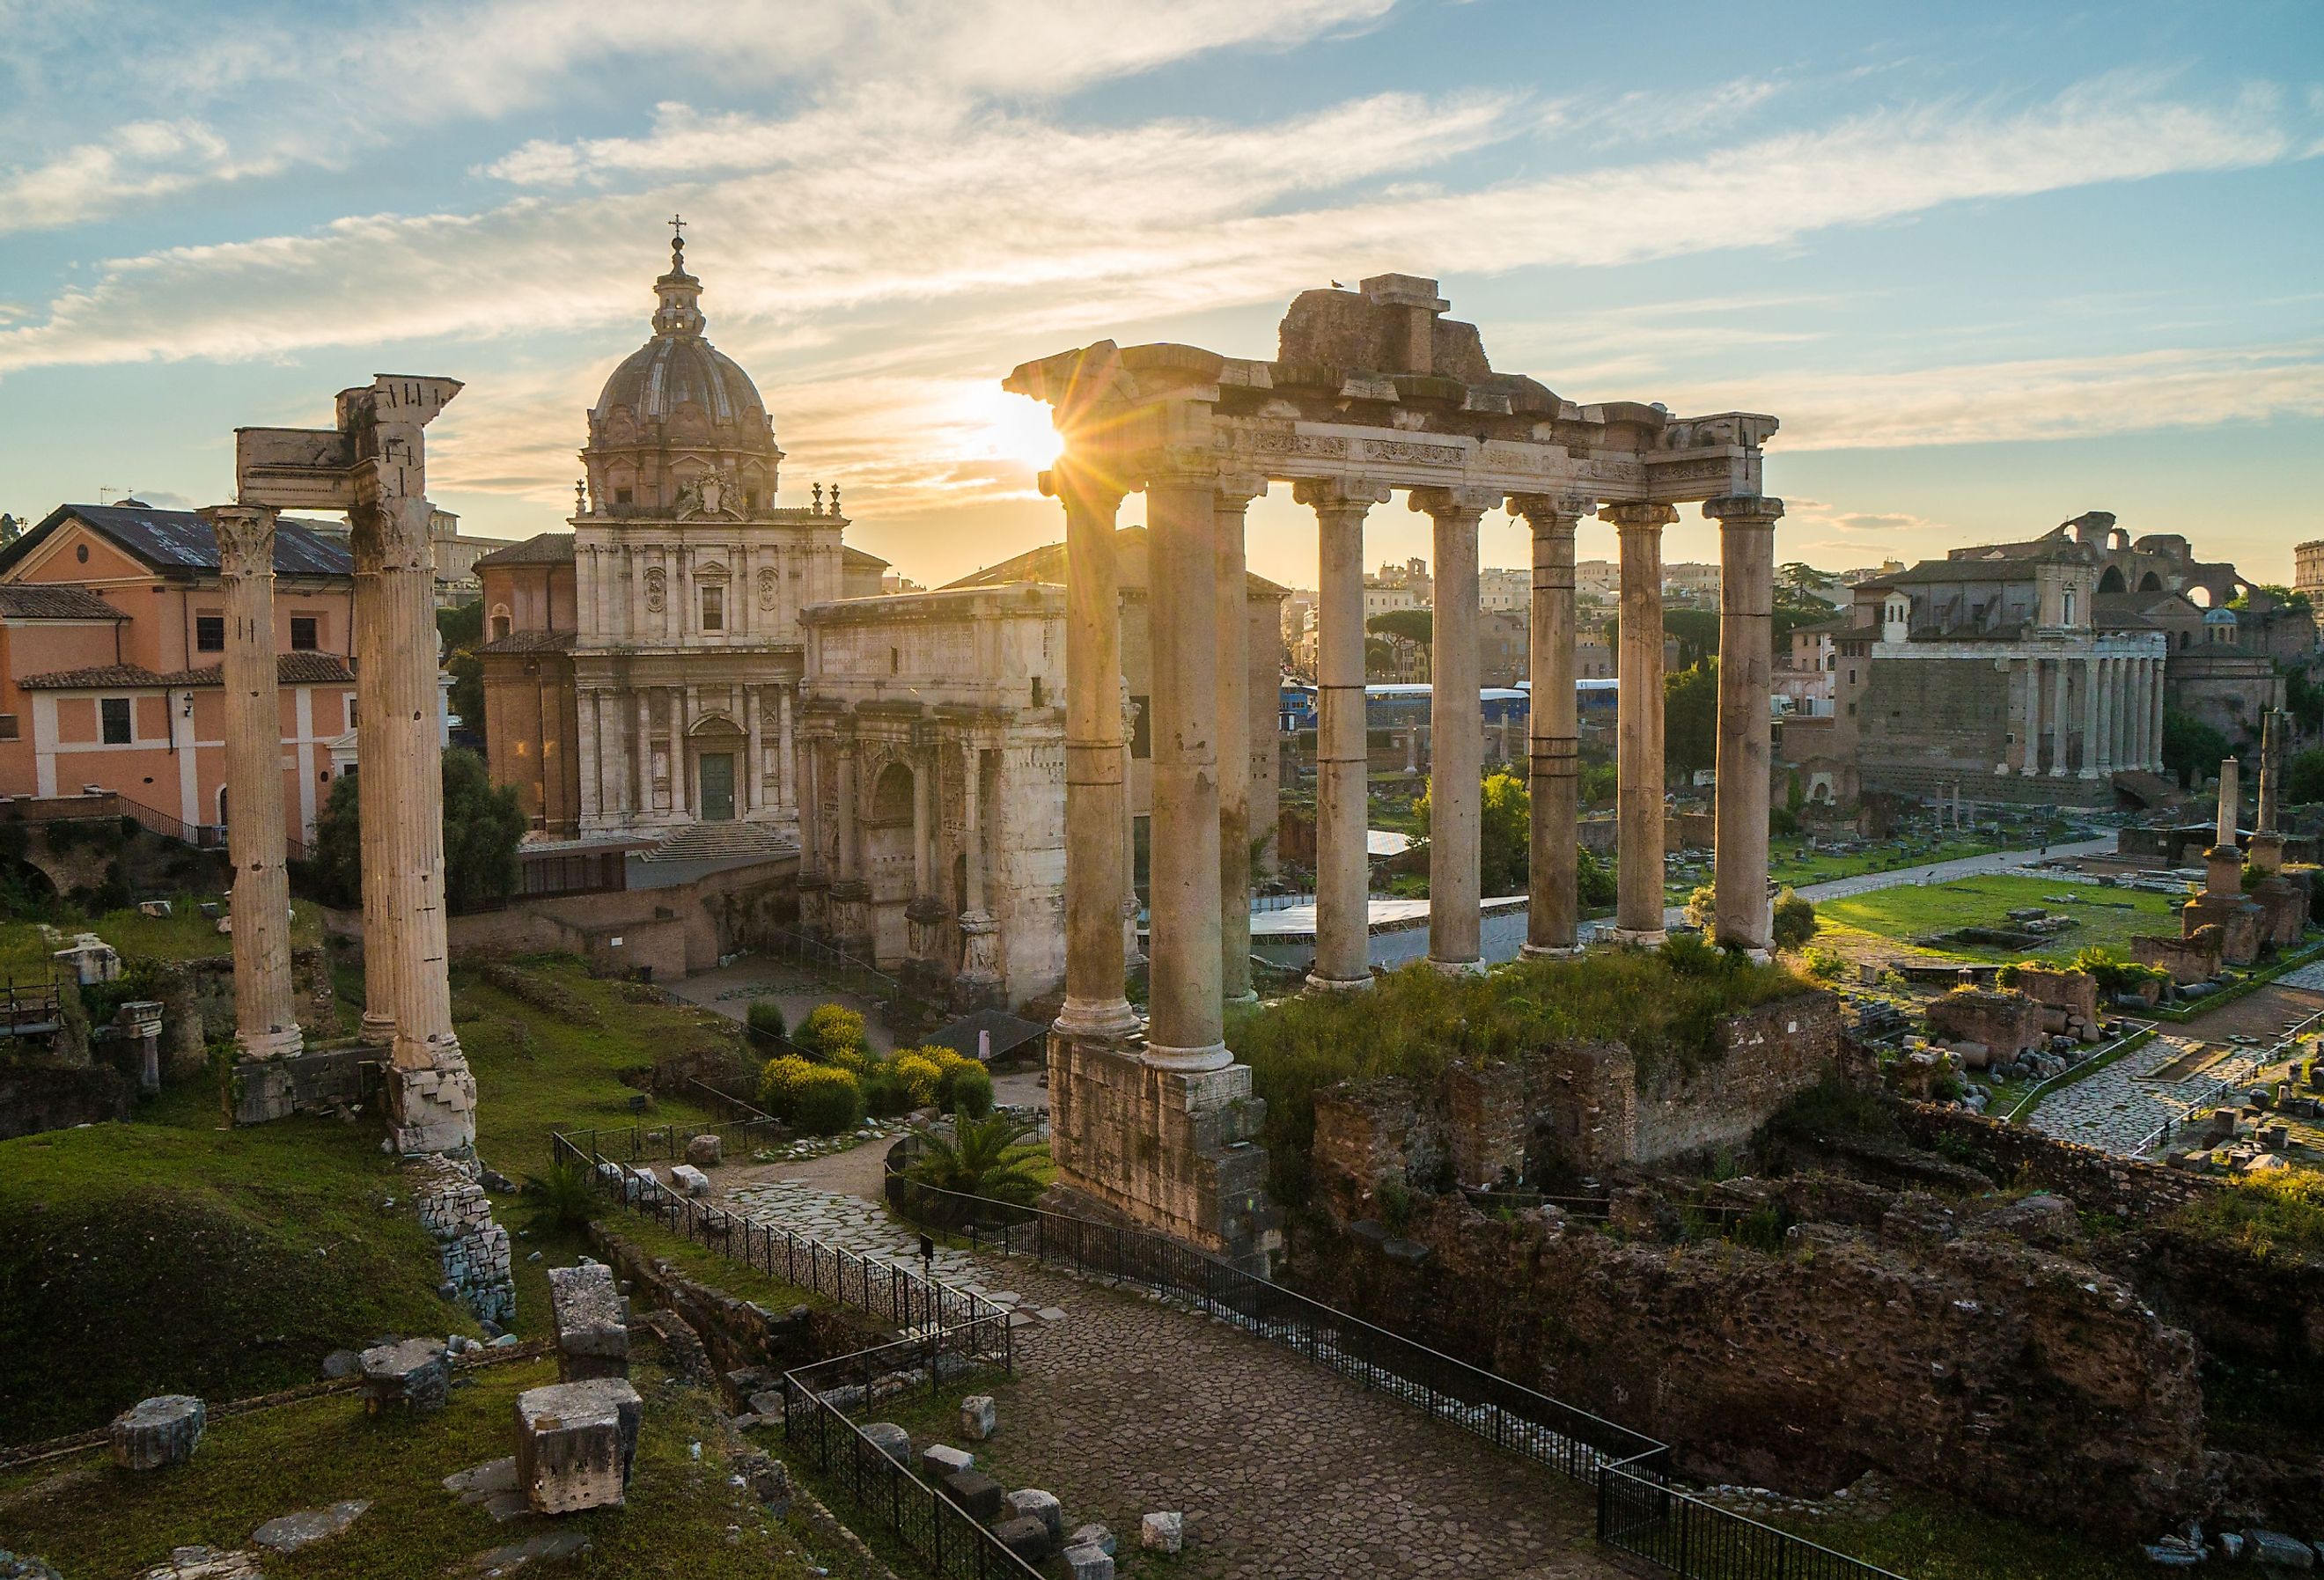 Roman Forum ruins. Image credit Ioana Catalina E via Shutterstock